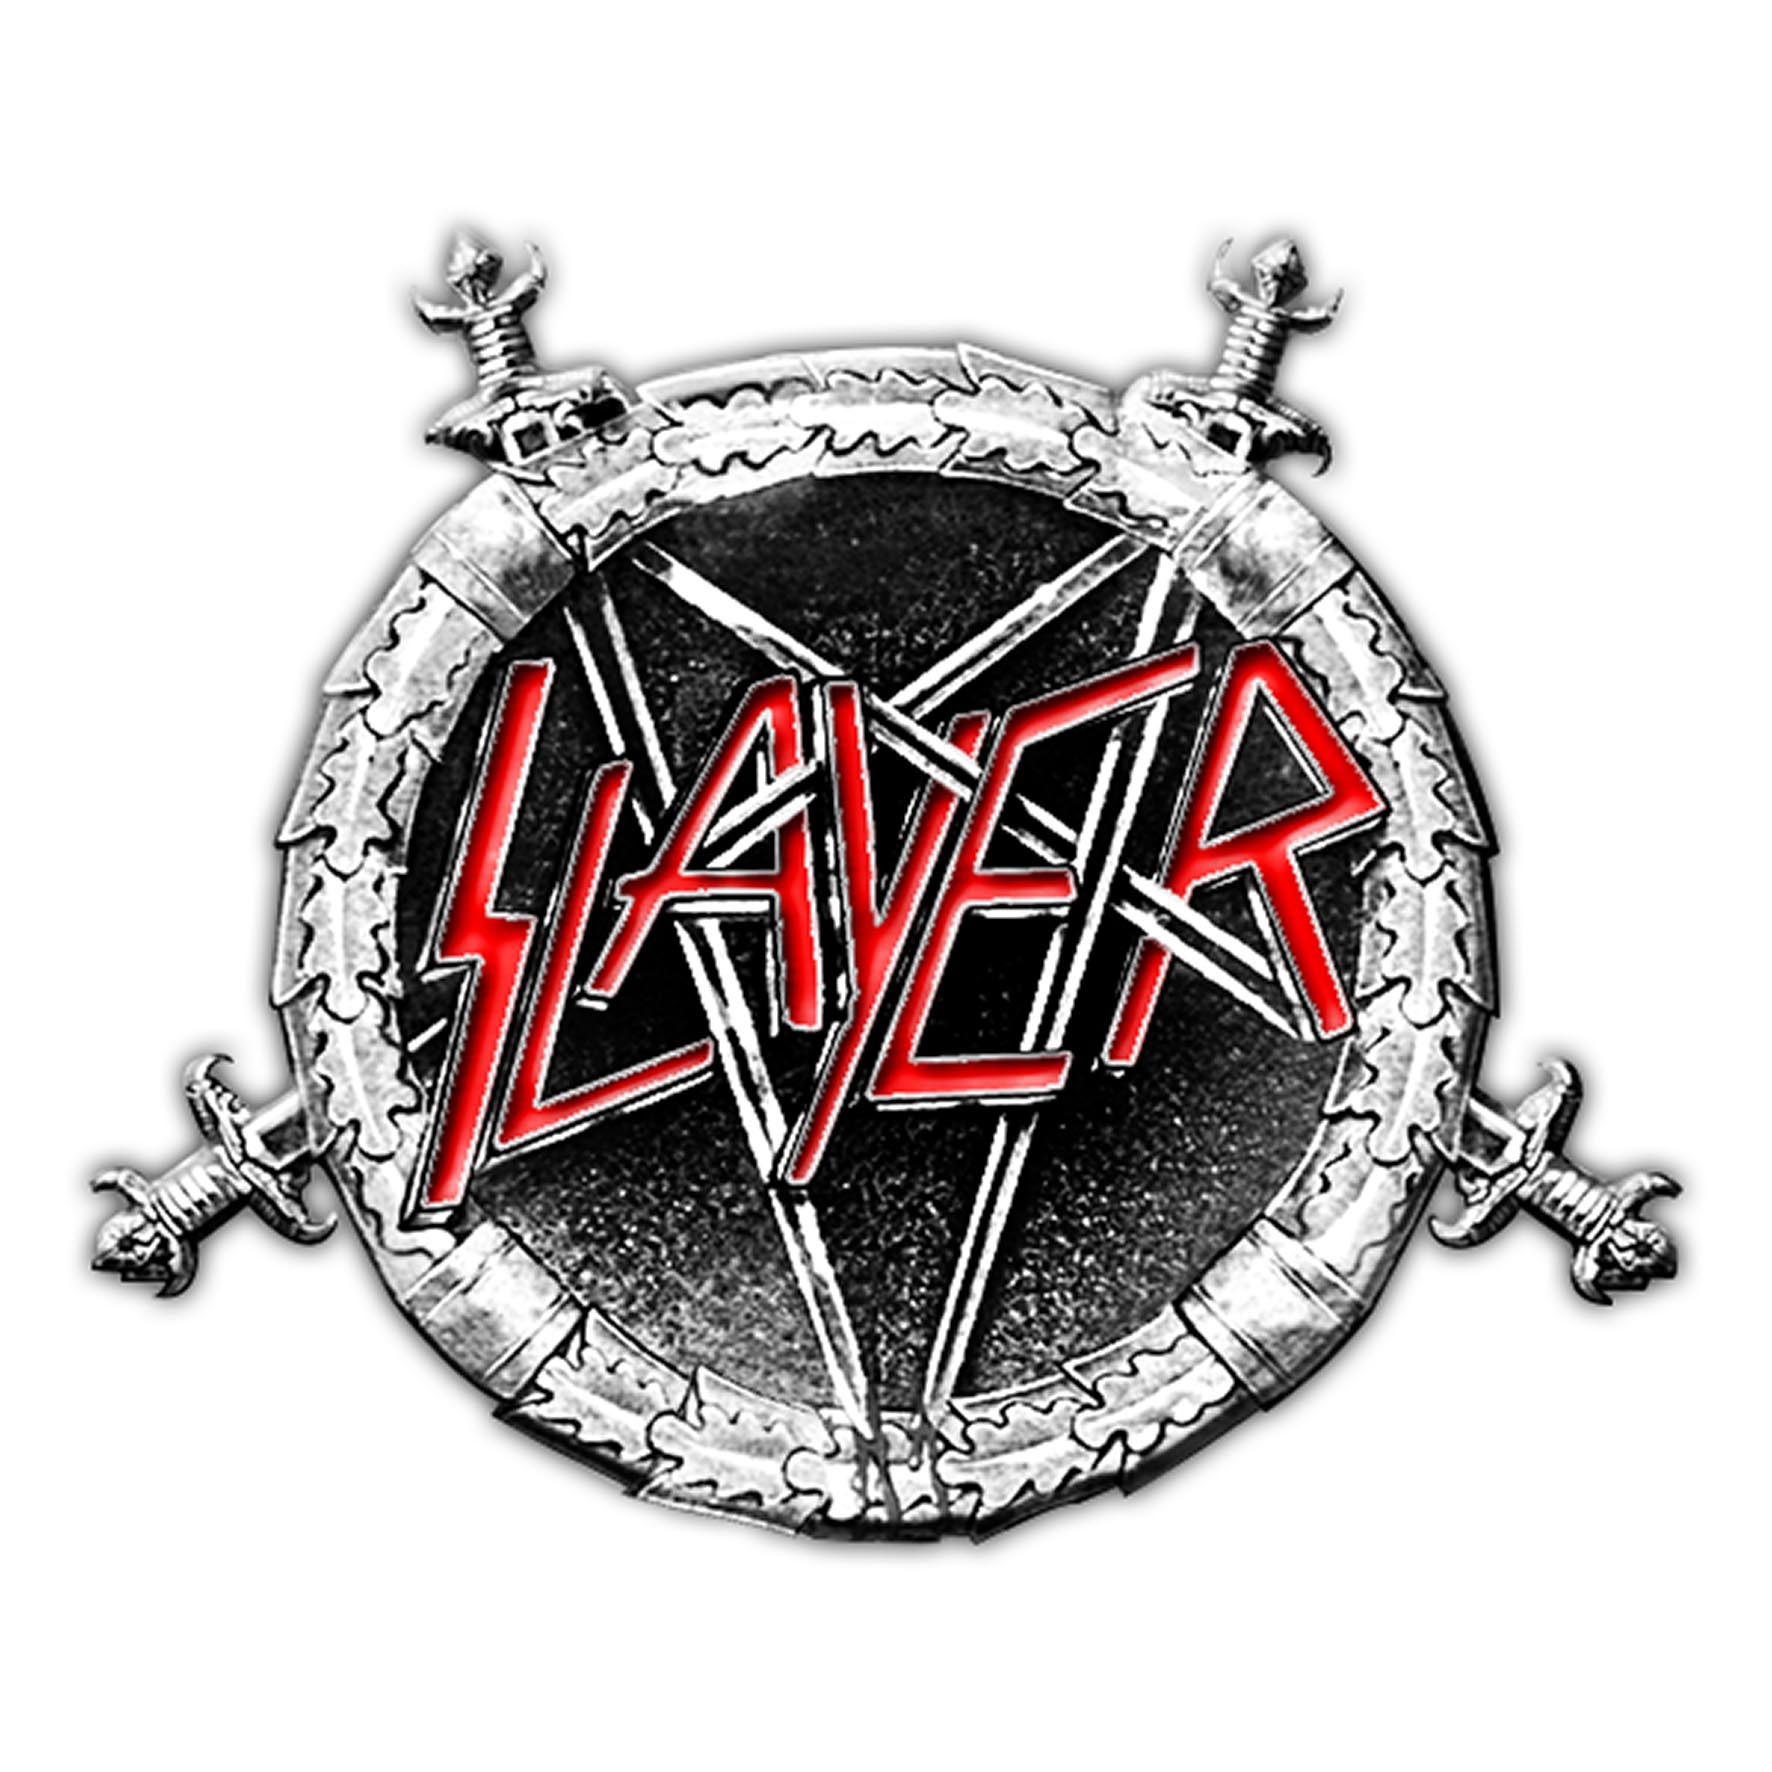 Slayer 'Pentagram' Metal Pin Badge - HMOL